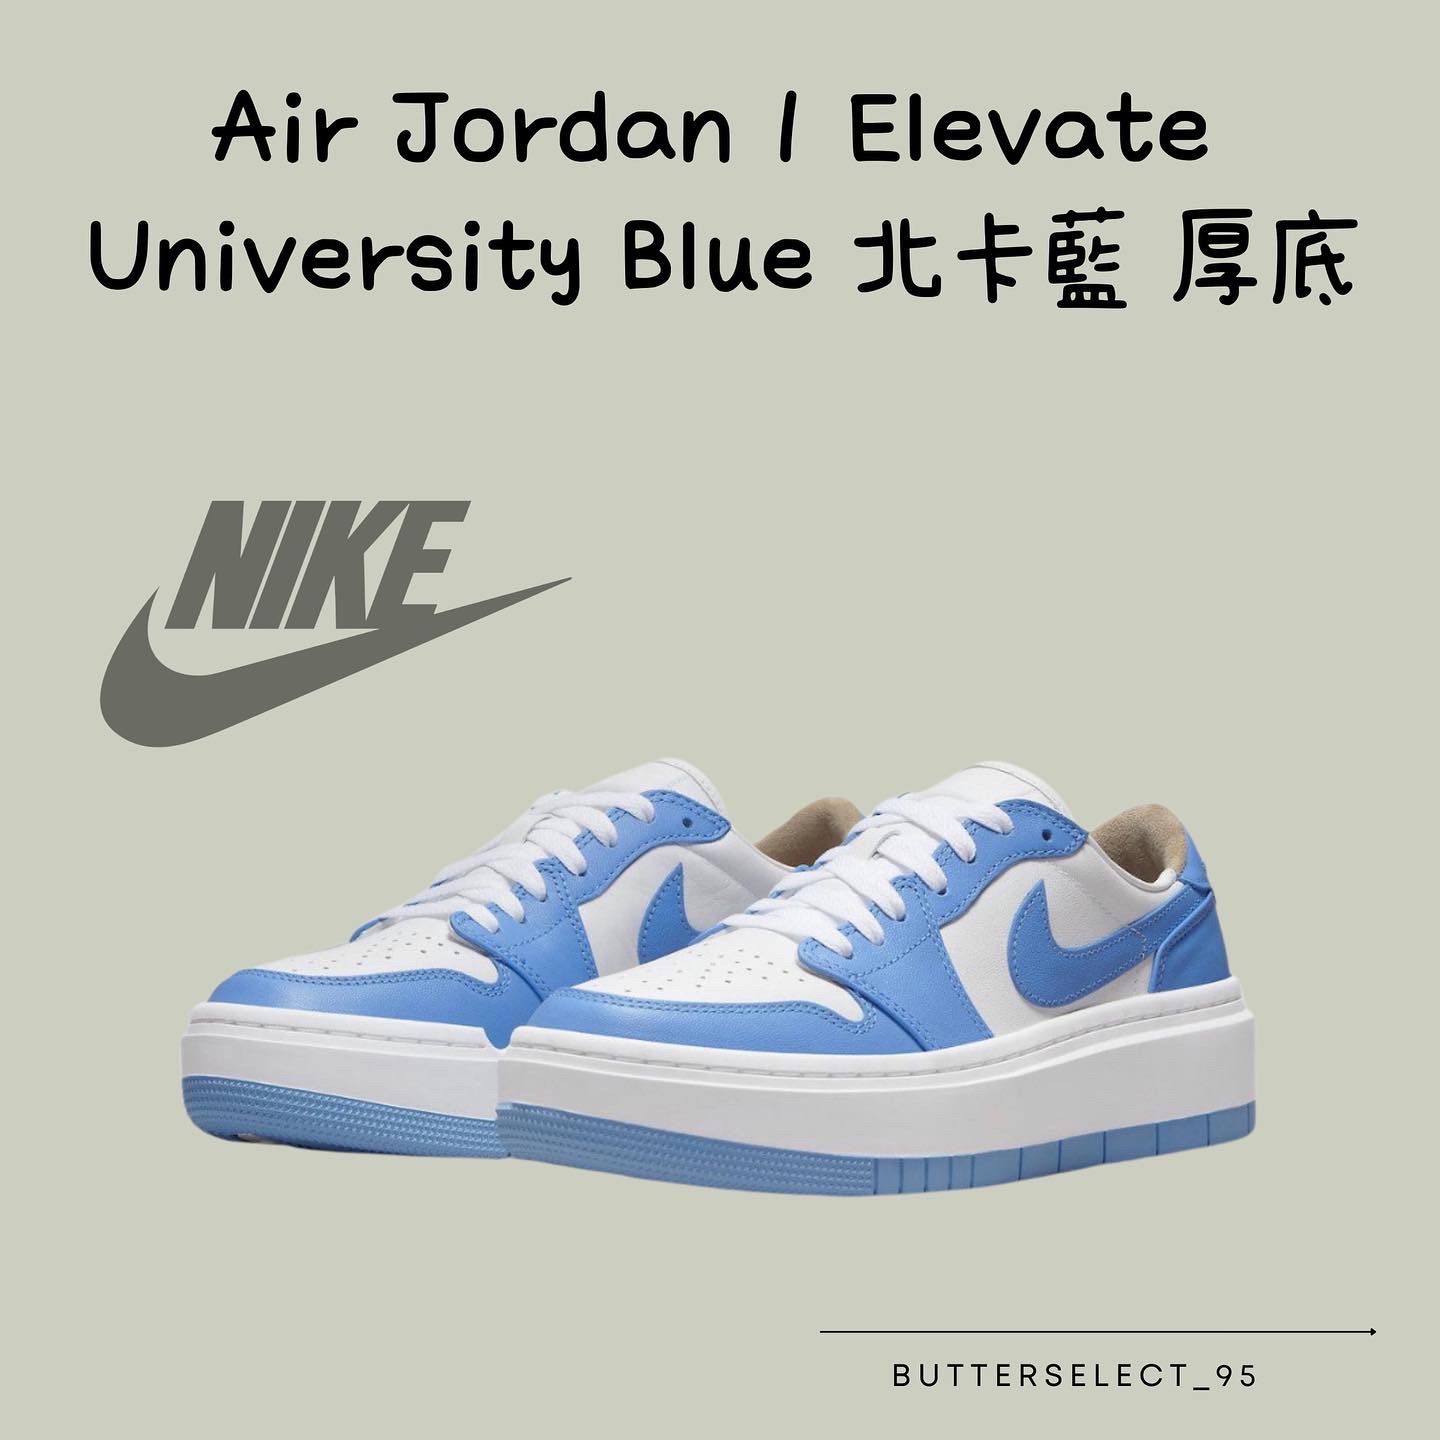 Air Jordan 1 Elevate University Blue 北卡藍厚底| 所有商品All